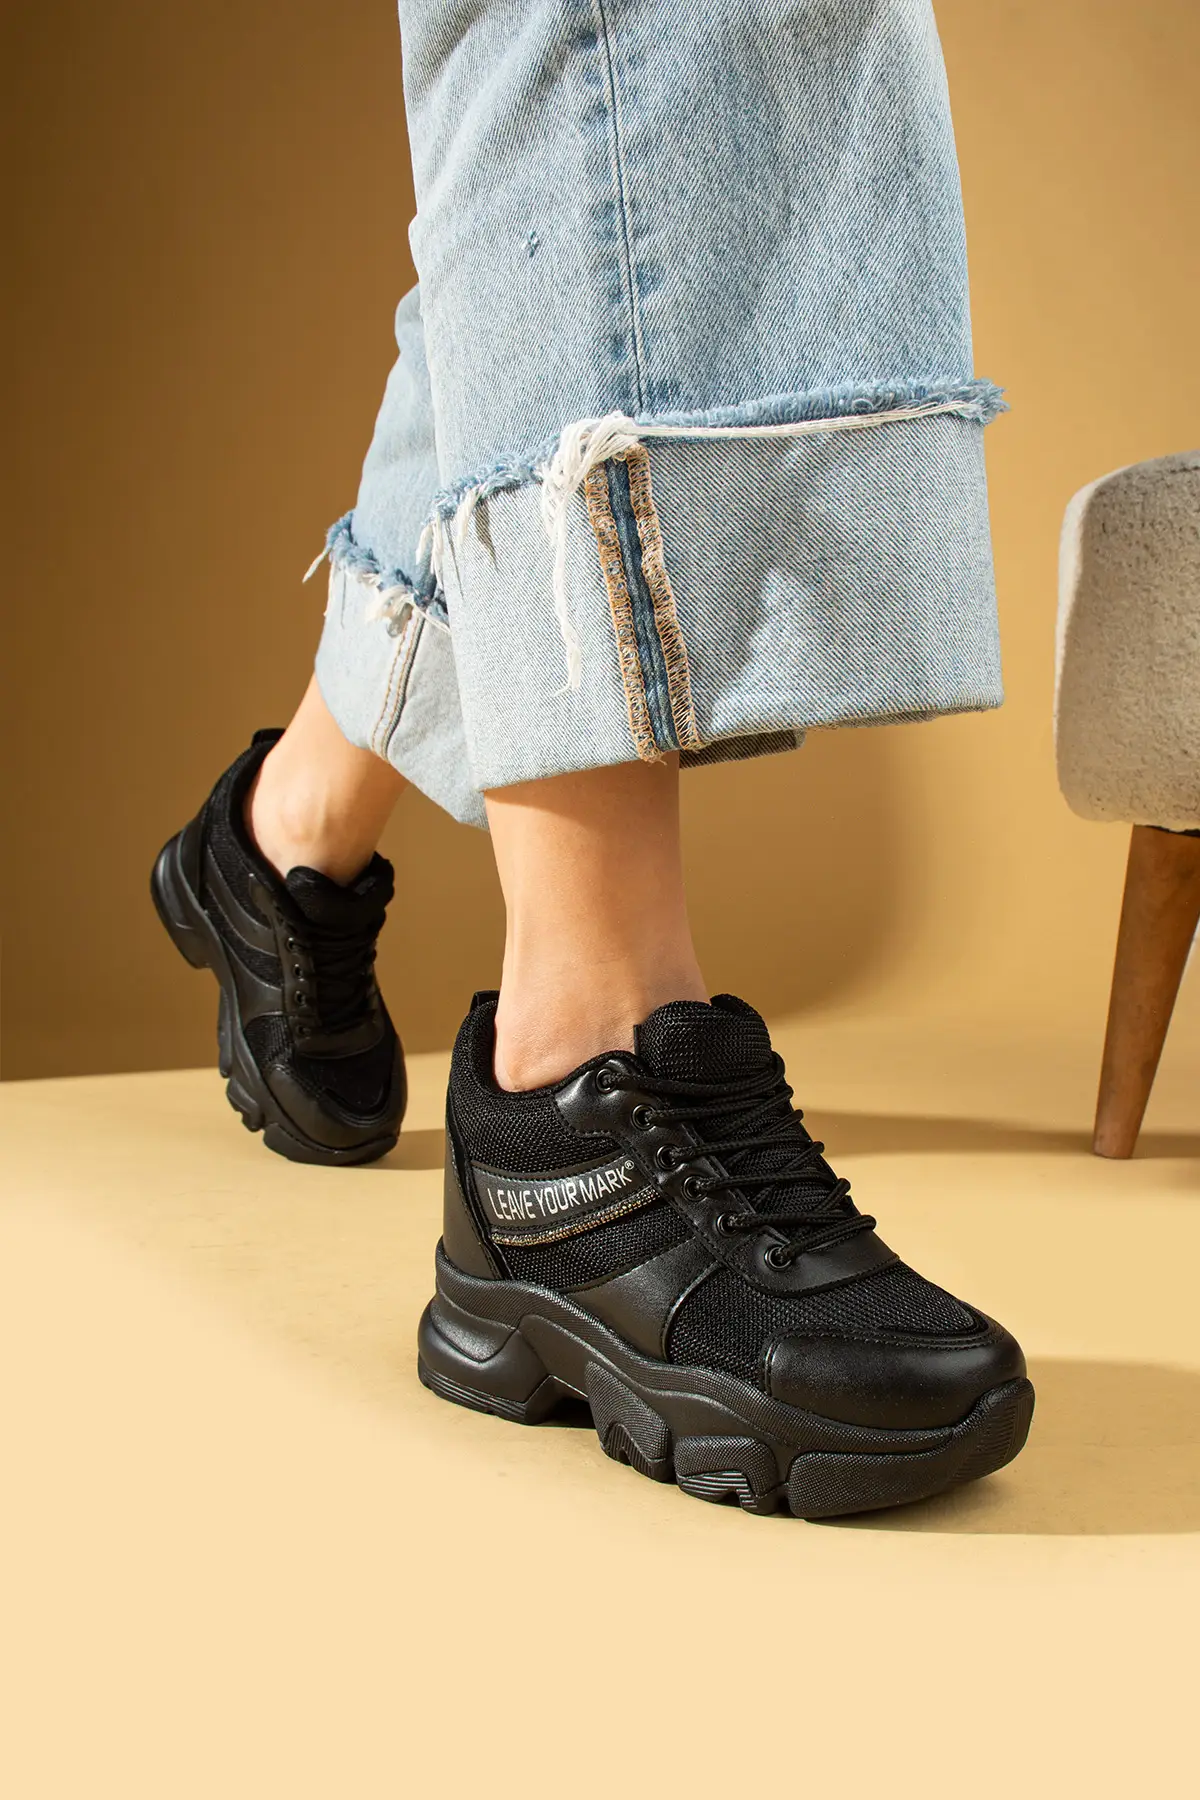 Pembe Potin Gizli Topuklu Rahat Hafif Taban Bağcıklı Kadın Sneaker 001-209-24 - Siyah